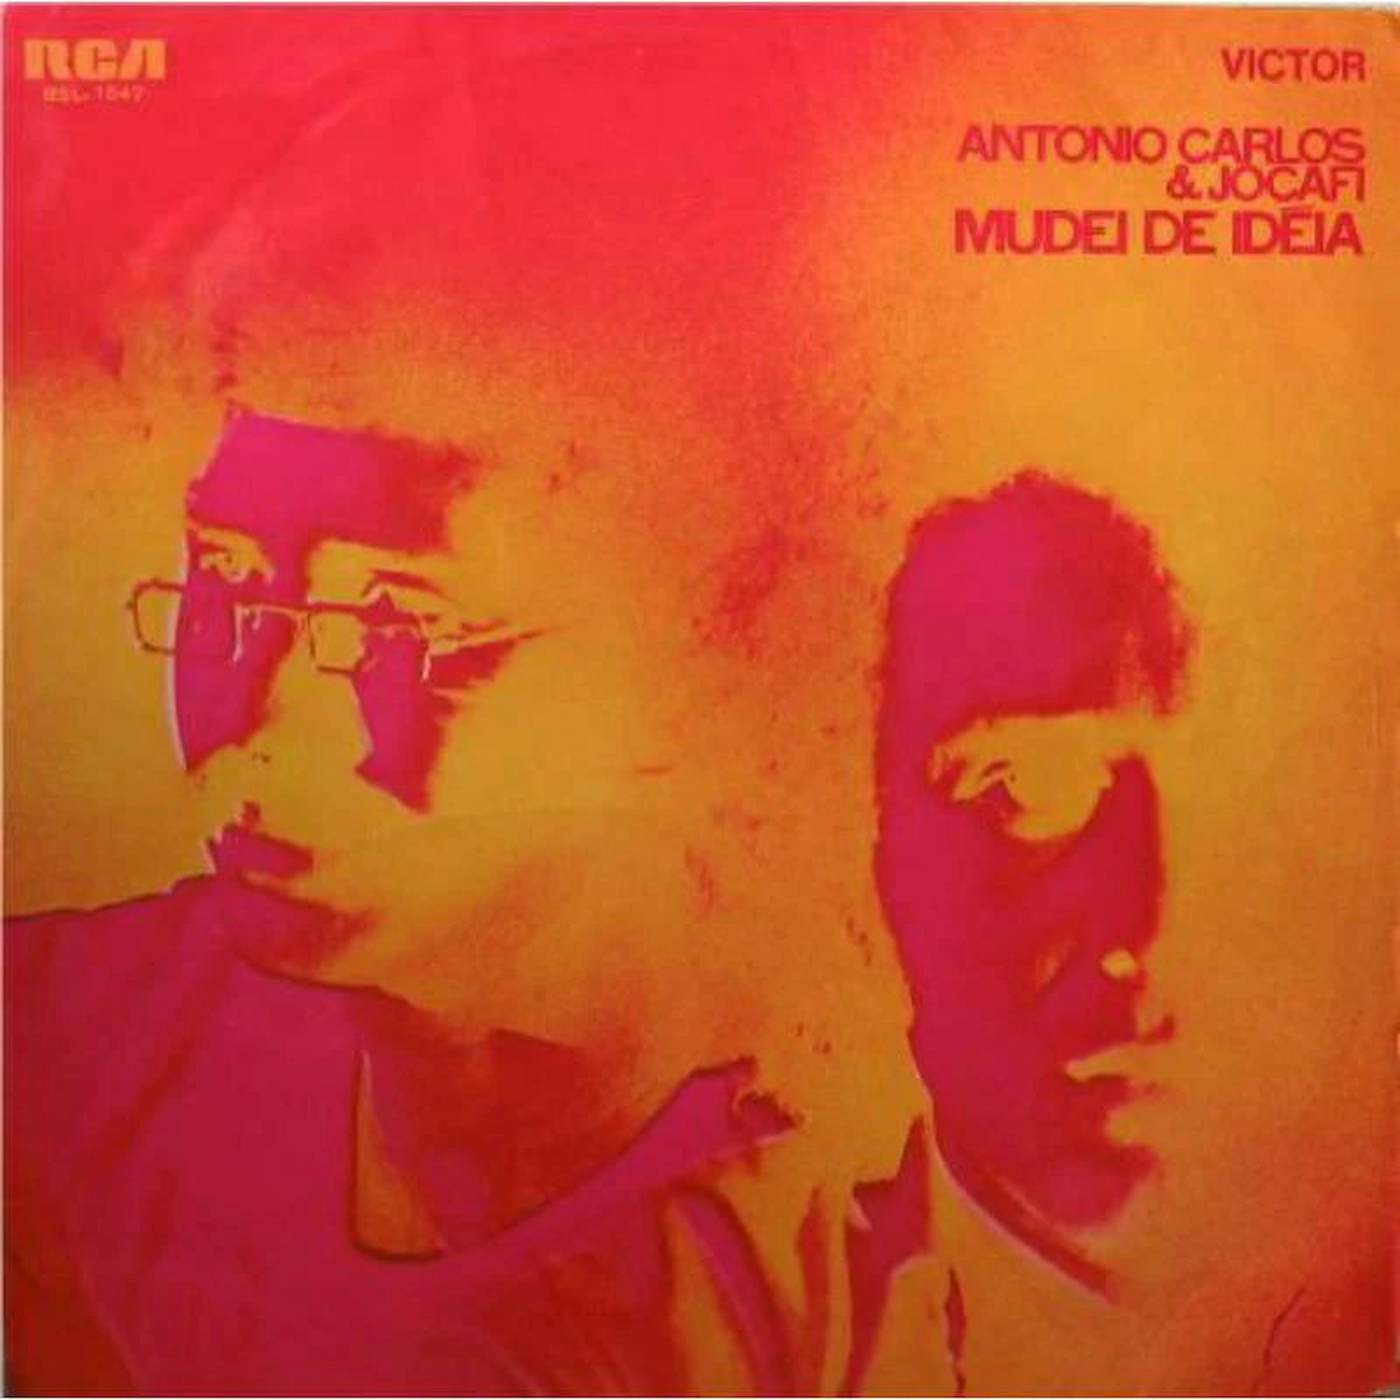 Antonio Carlos & Jocafi LP - Mudei De Ideia (Vinyl)